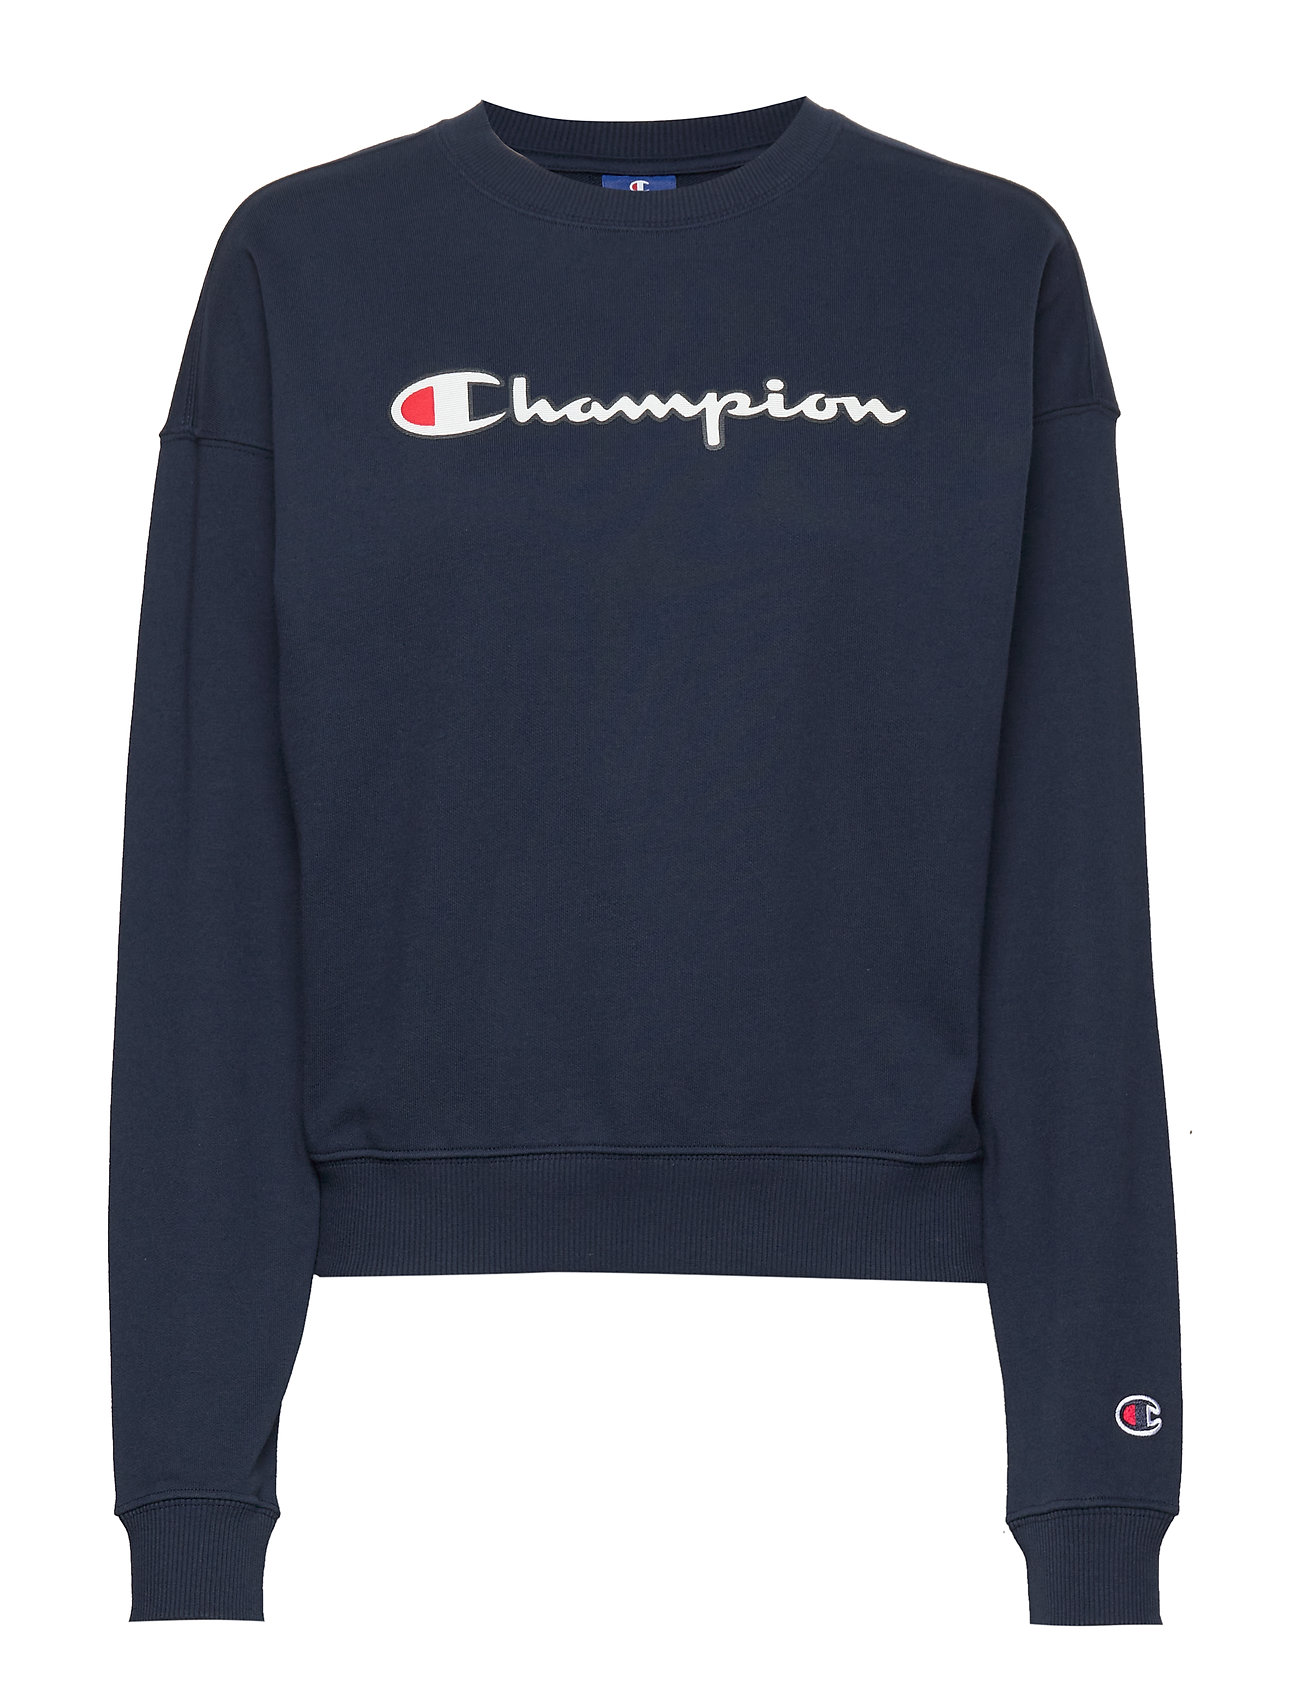 champion navy blue sweater